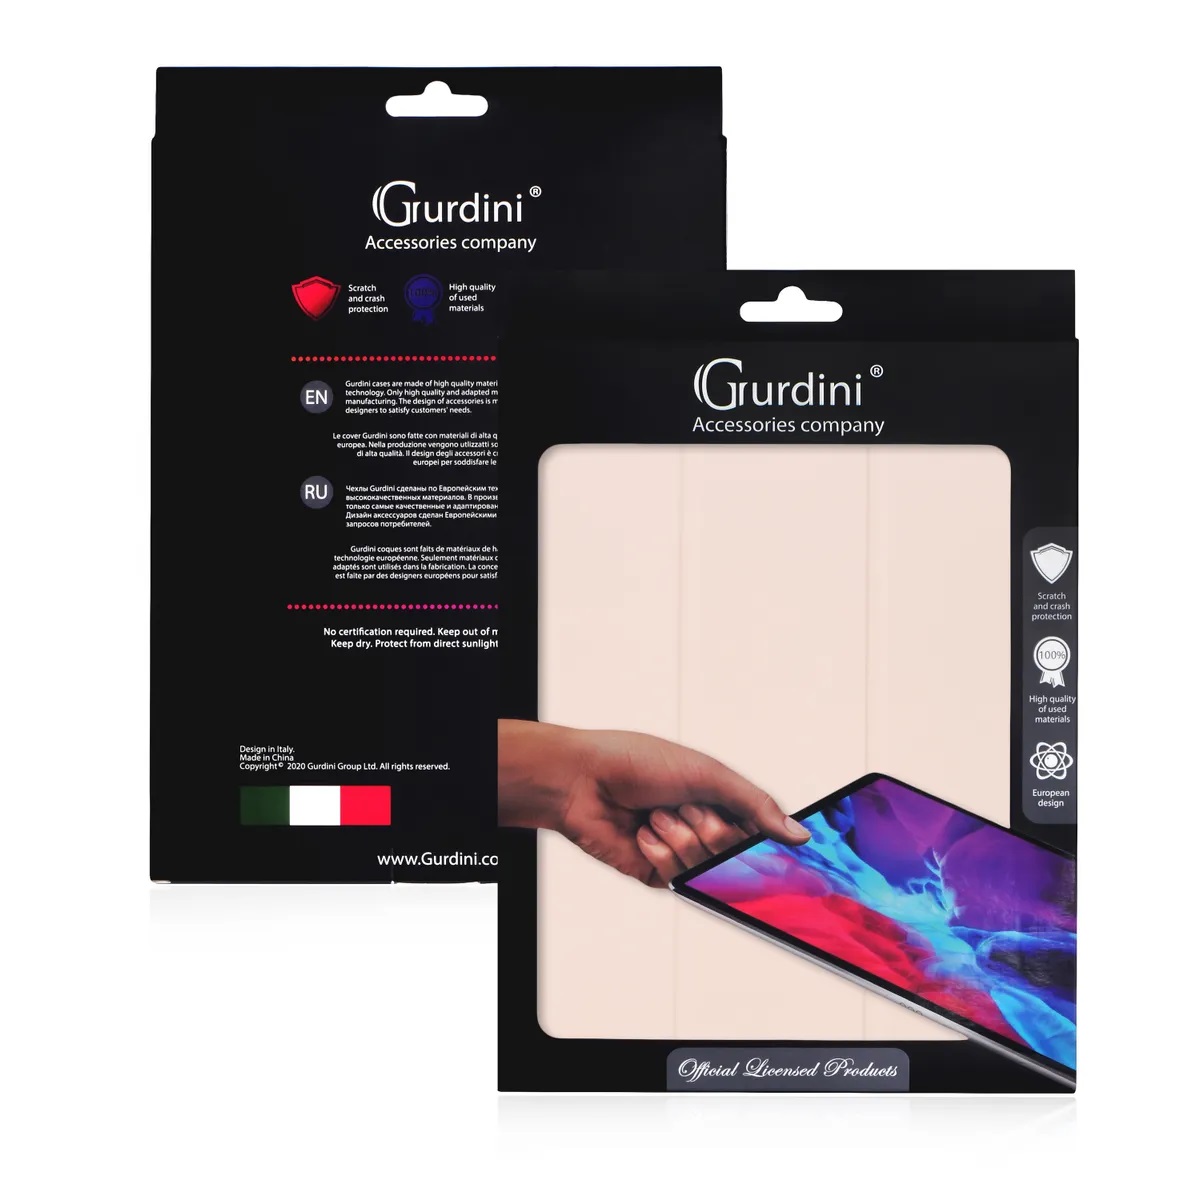 Чехол-книжка Gurdini Milano Series (pen slot) для iPad Pro 11 Pink Sand